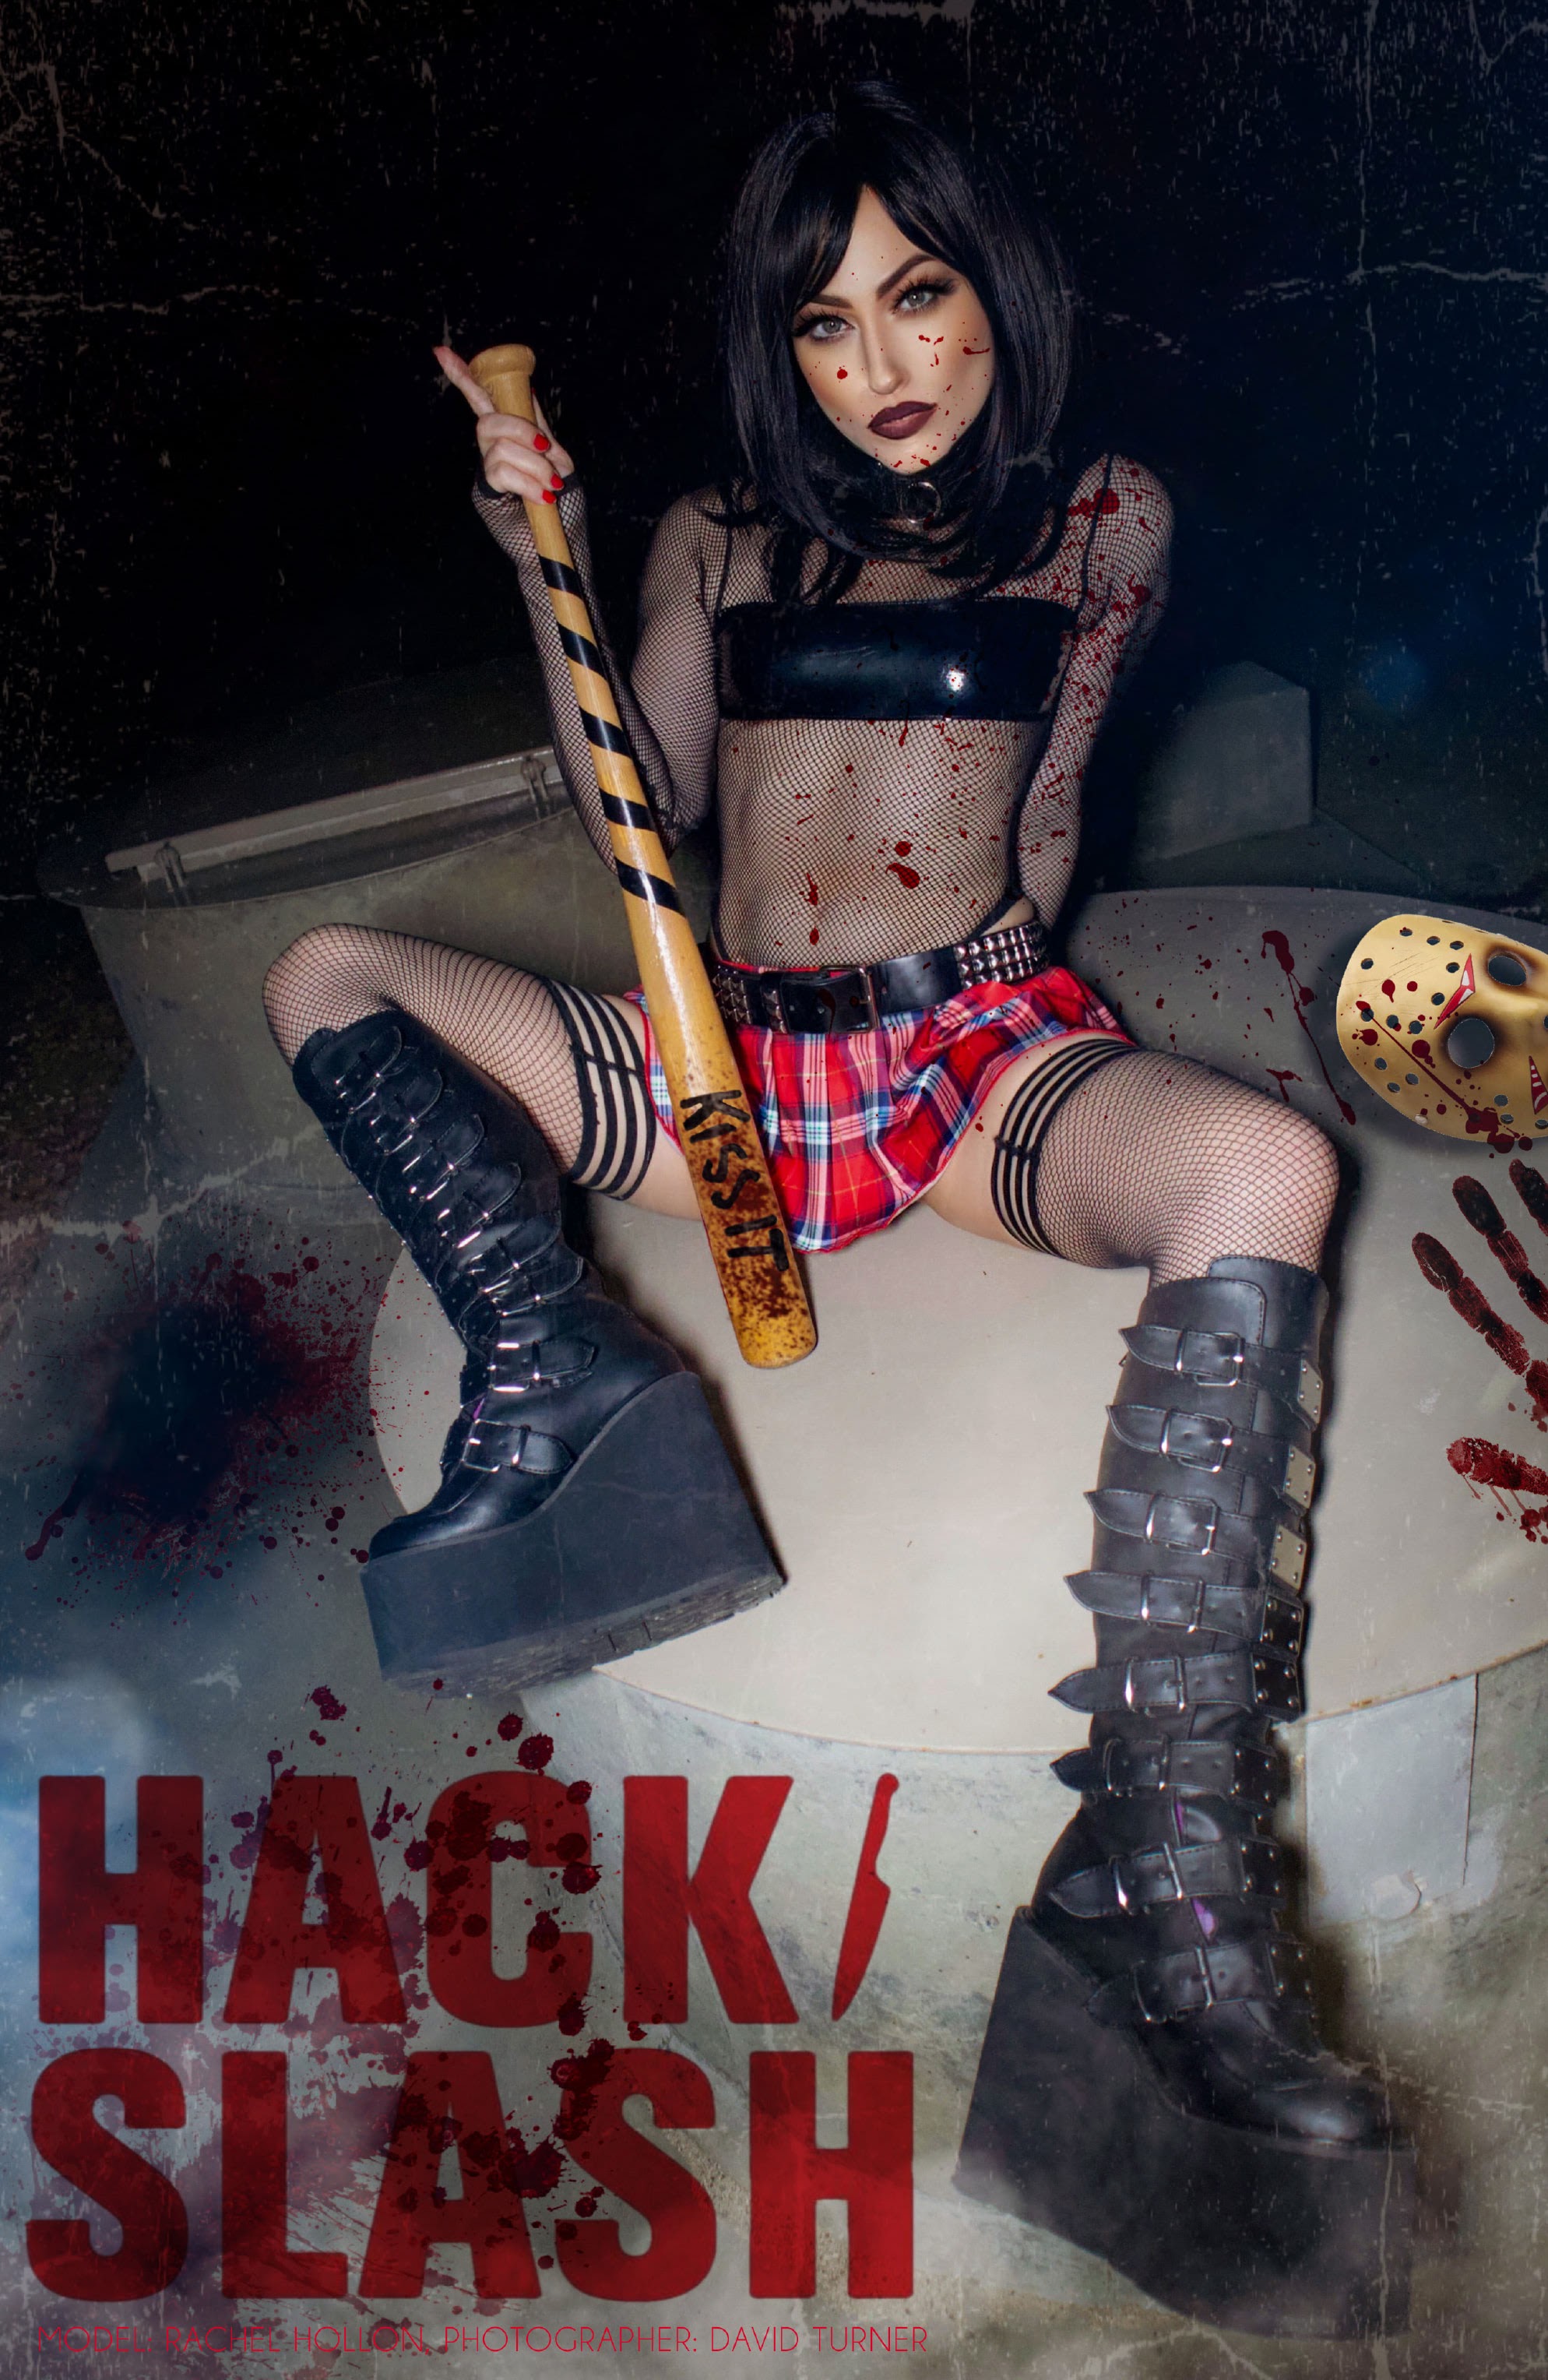 Read online Hack/Slash: Hot Shorts comic -  Issue # Full - 28